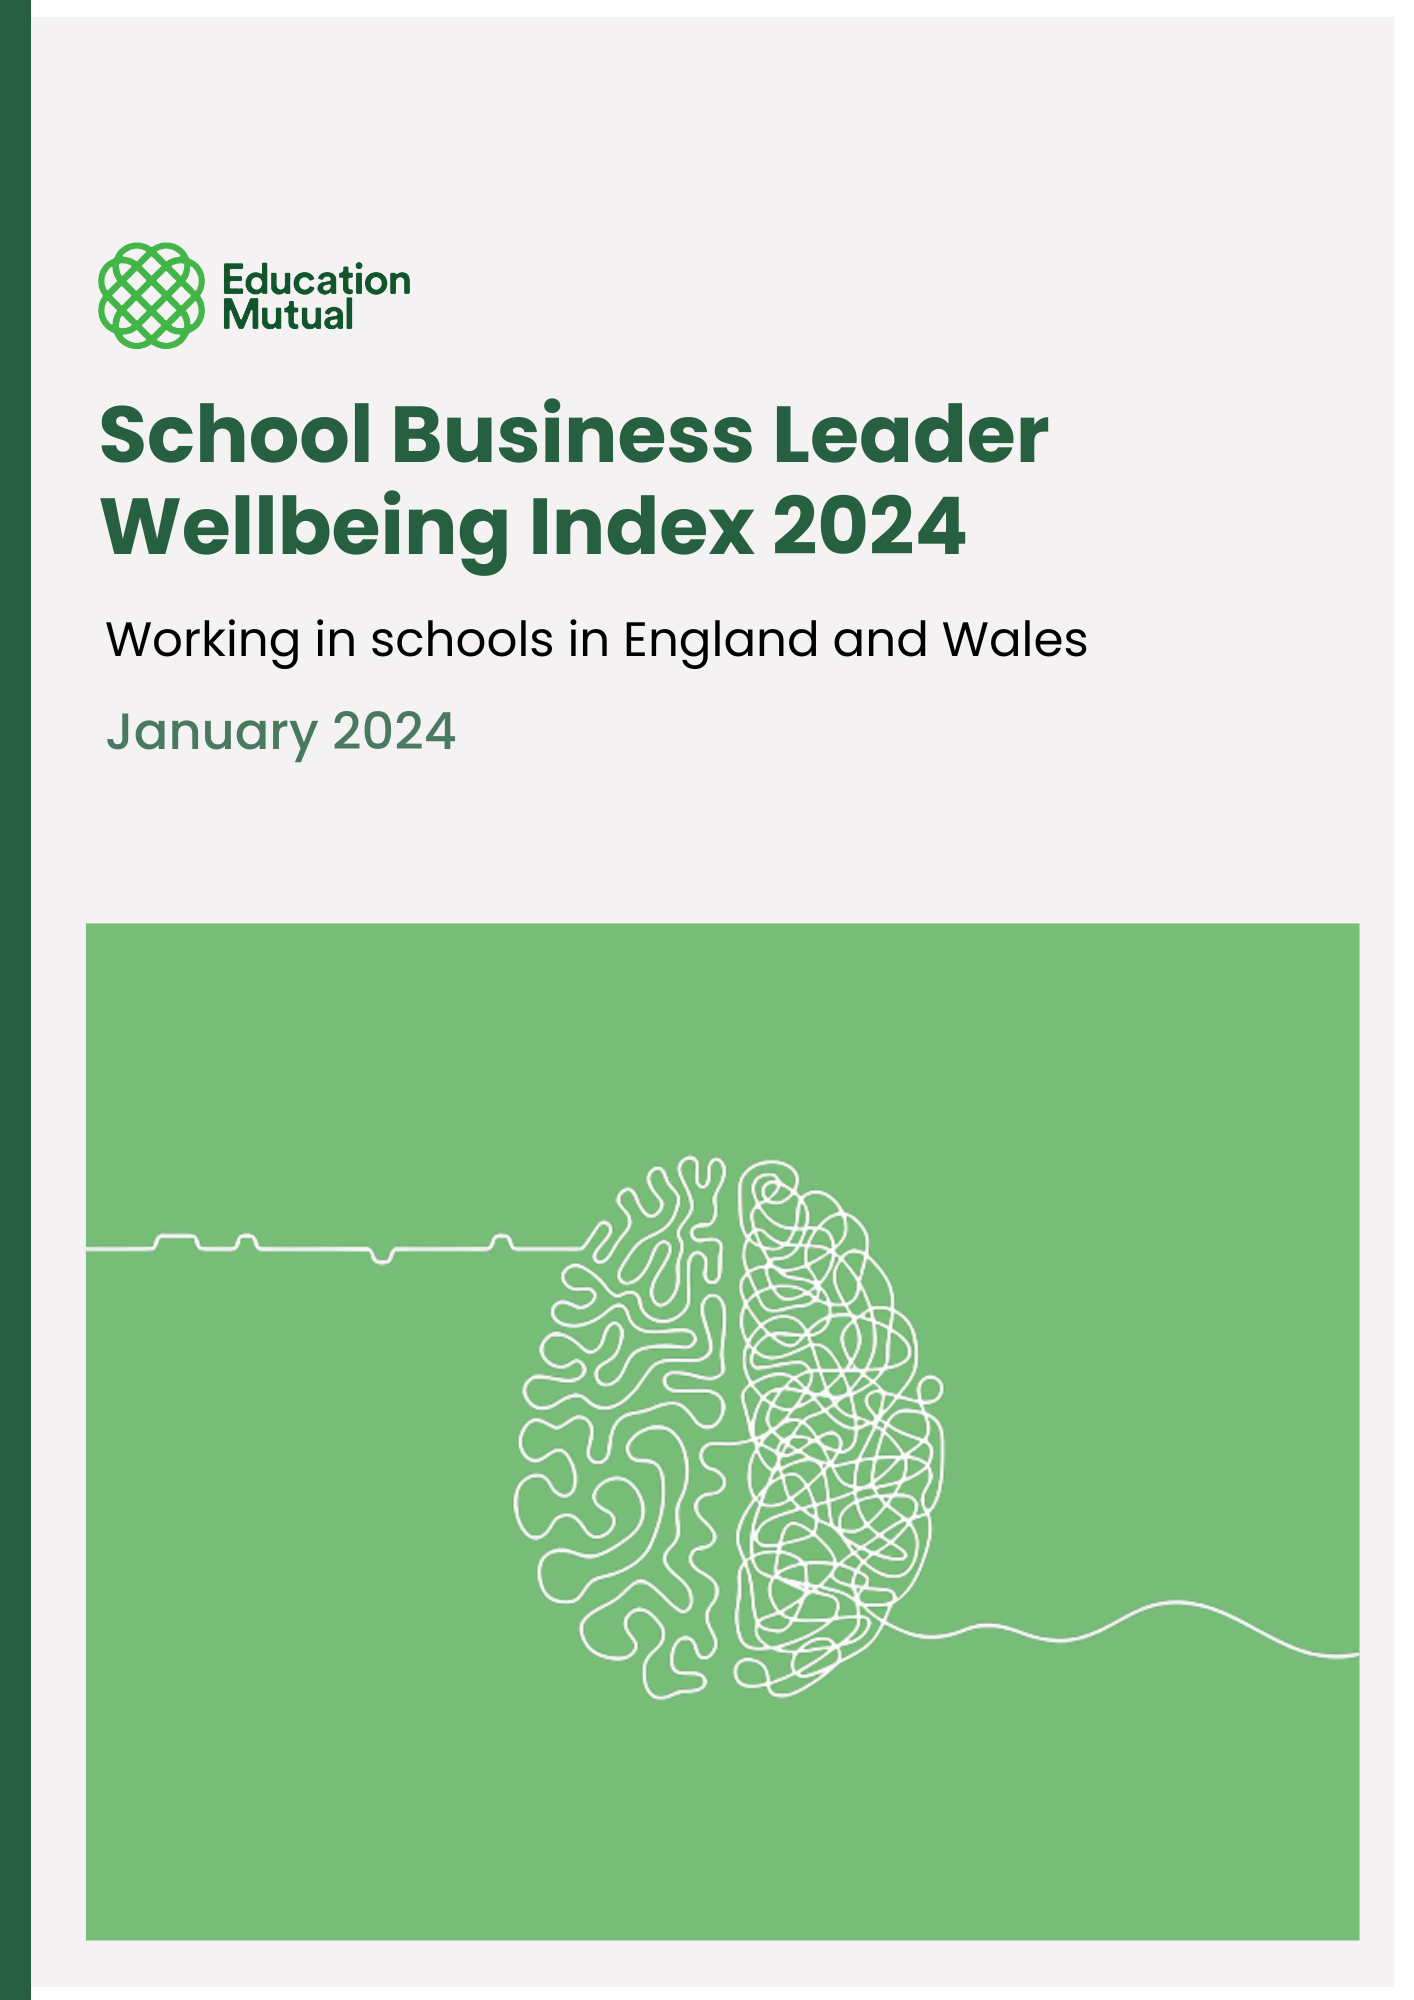 SBL Wellbeing Index 2024